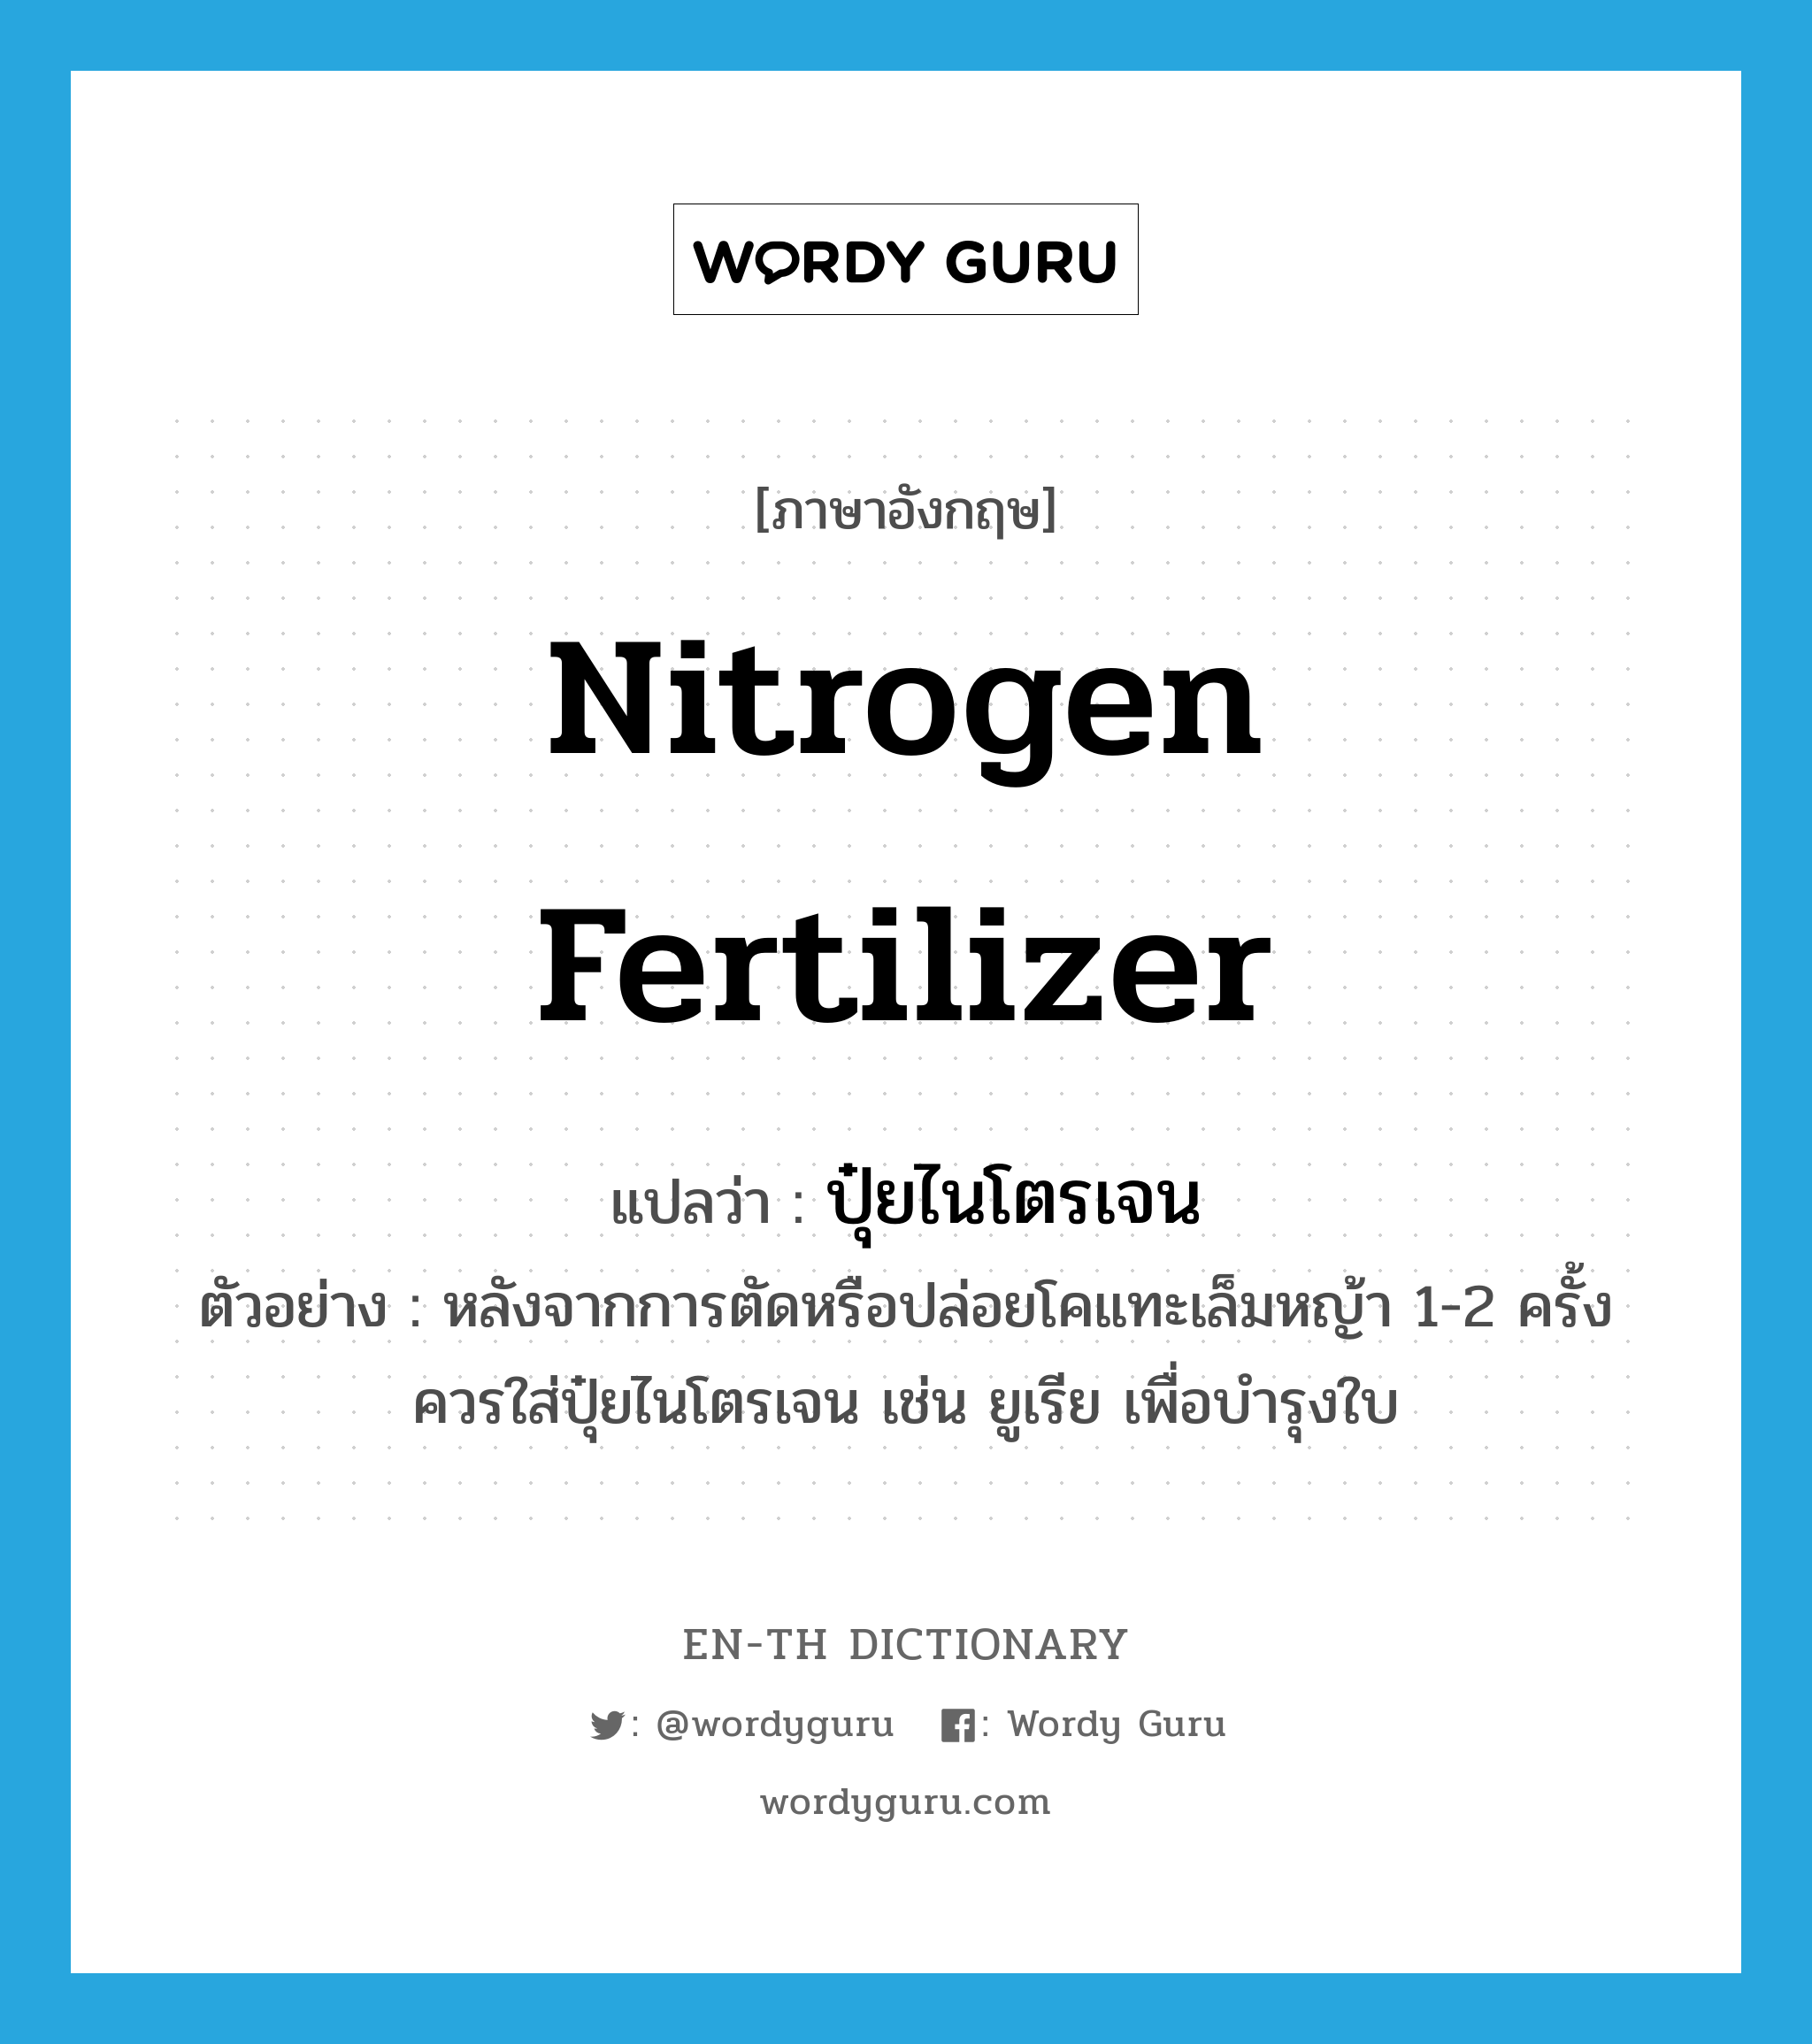 nitrogen fertilizer แปลว่า?, คำศัพท์ภาษาอังกฤษ nitrogen fertilizer แปลว่า ปุ๋ยไนโตรเจน ประเภท N ตัวอย่าง หลังจากการตัดหรือปล่อยโคแทะเล็มหญ้า 1-2 ครั้งควรใส่ปุ๋ยไนโตรเจน เช่น ยูเรีย เพื่อบำรุงใบ หมวด N